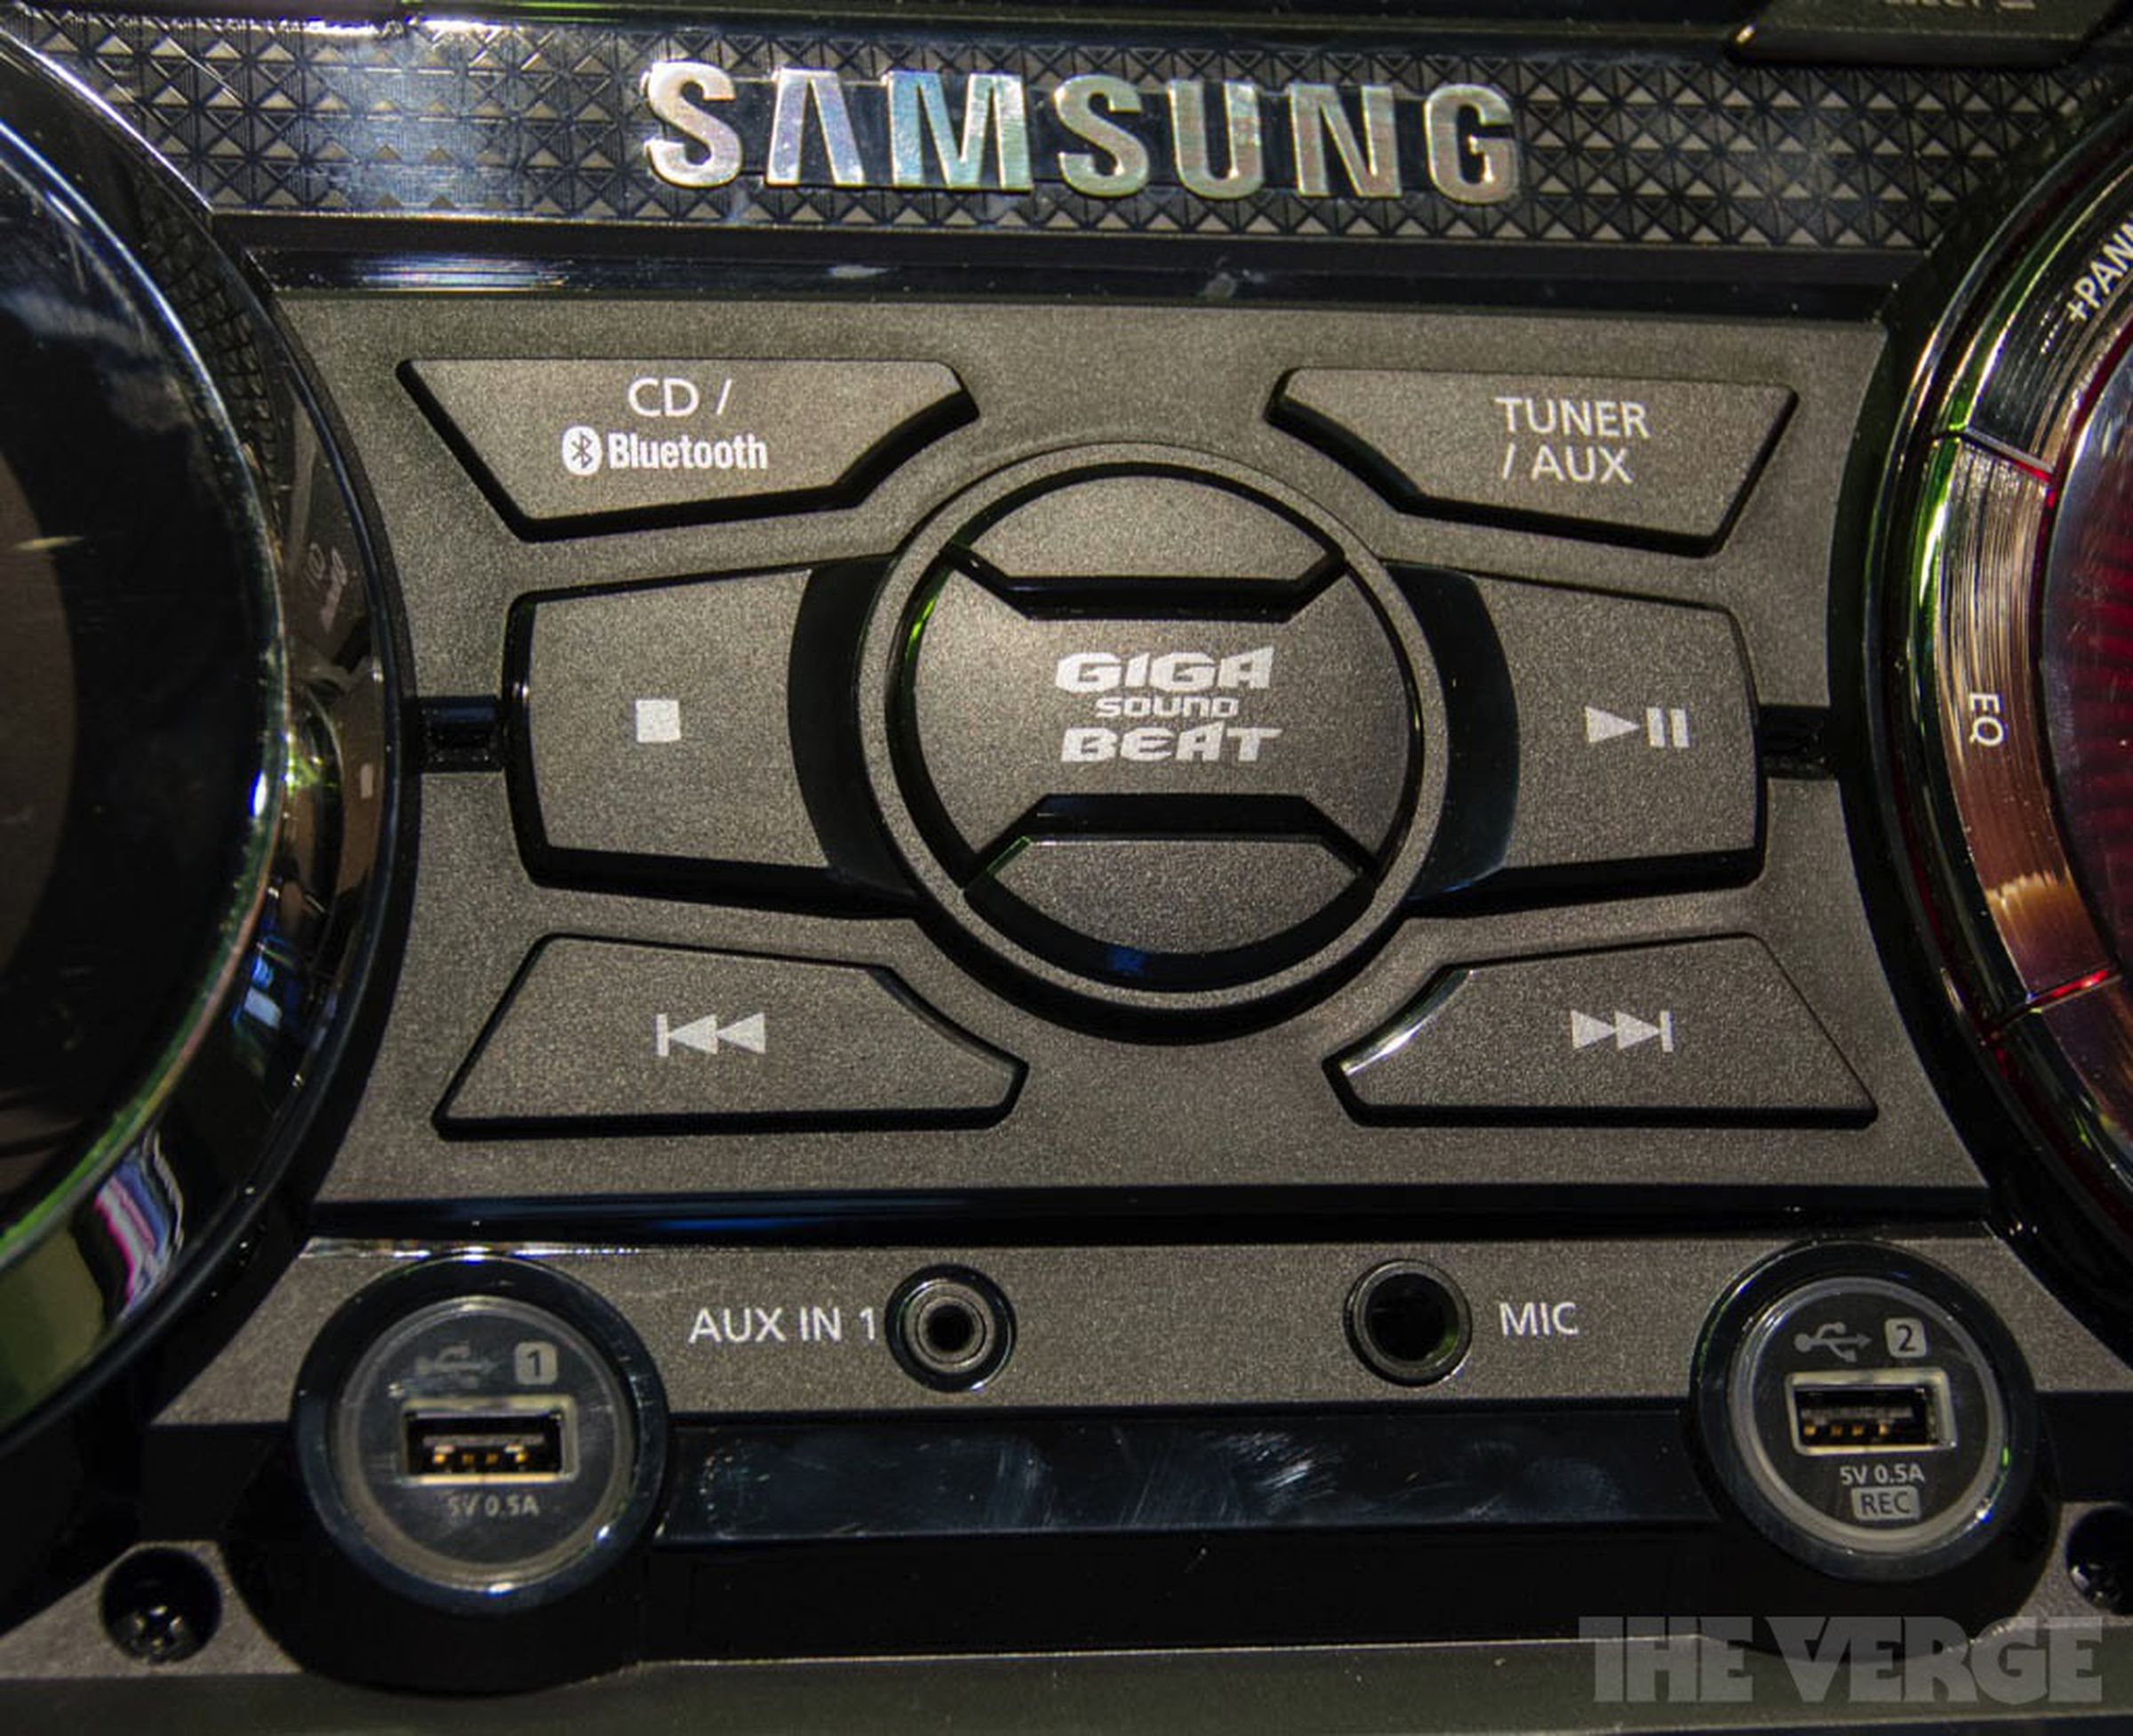 Samsung's GIGA MX-HS8500 speaker box